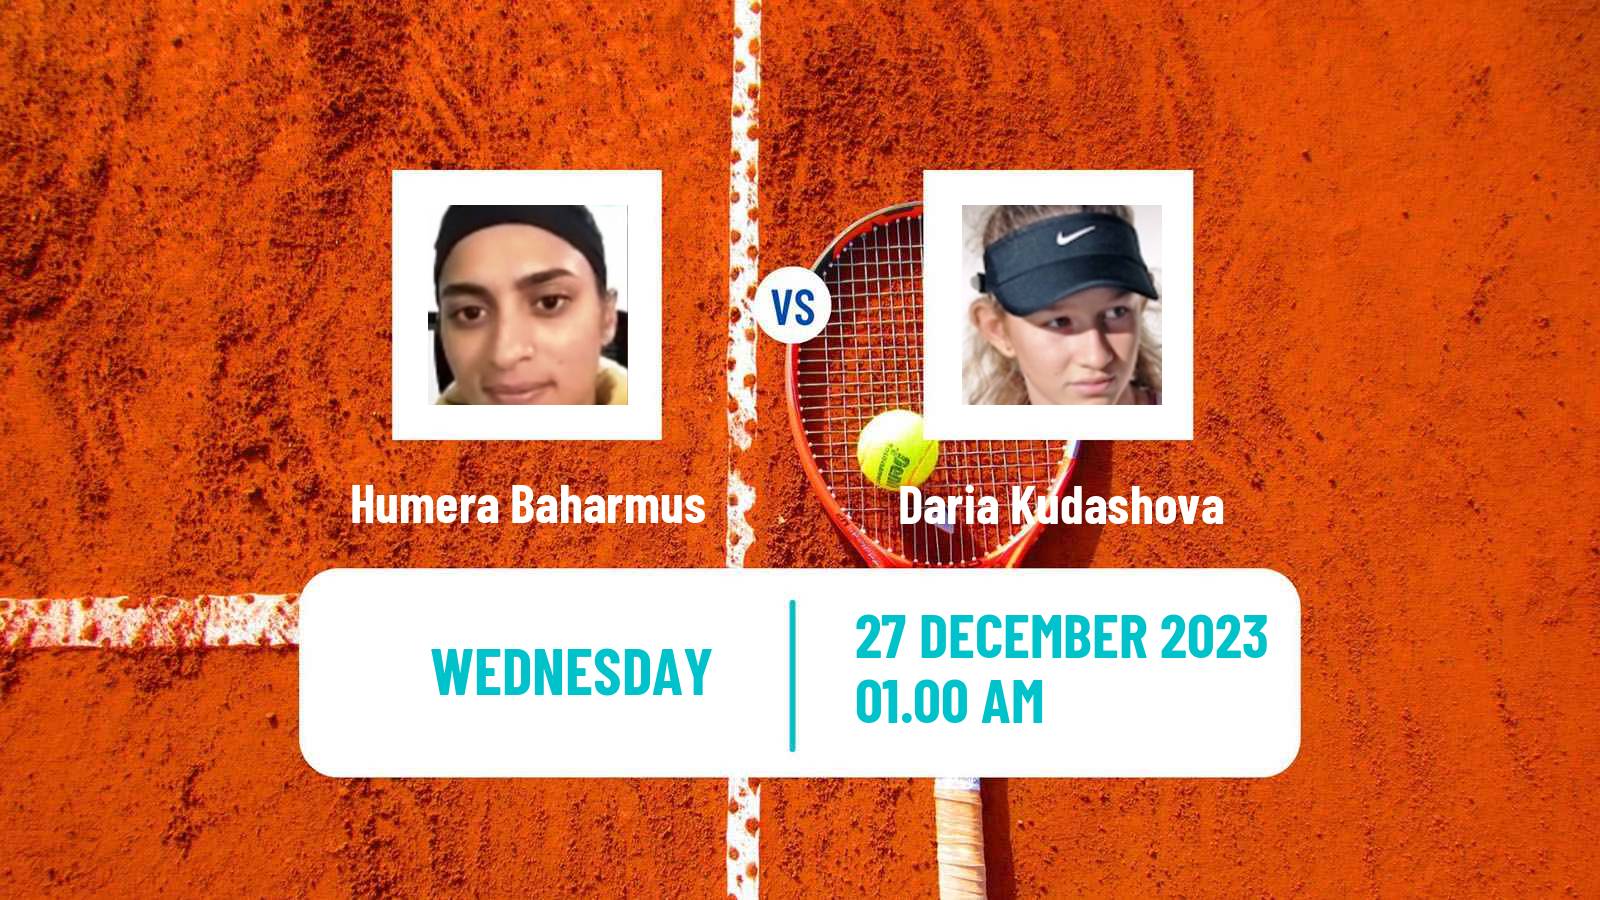 Tennis ITF W40 Navi Mumbai Women Humera Baharmus - Daria Kudashova